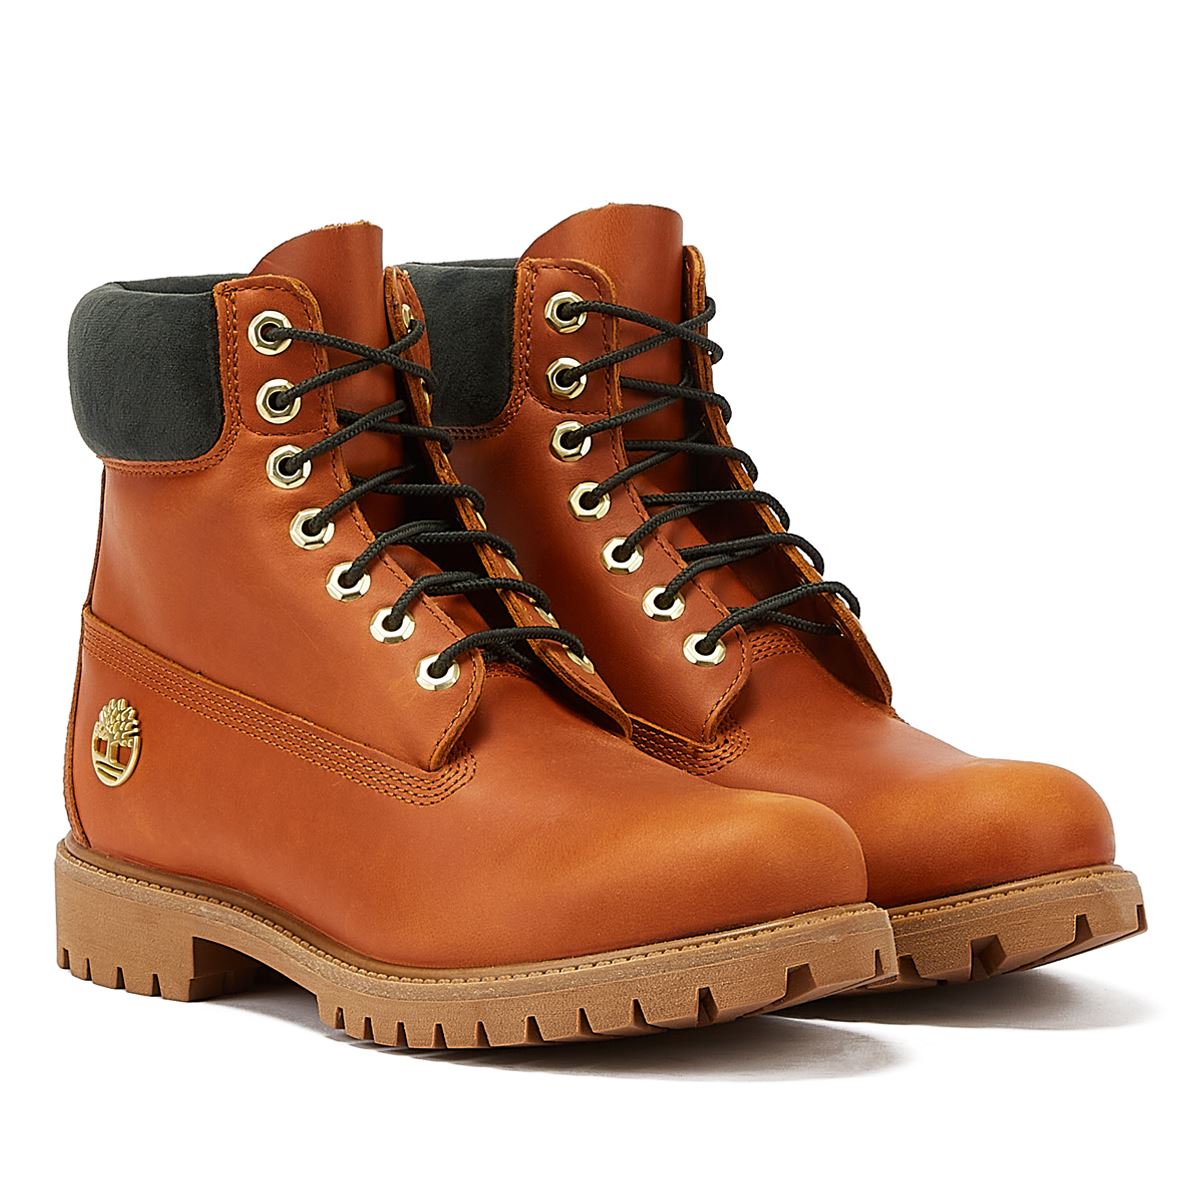 Timberland 6 Inch Premium Men’s Tan Boots